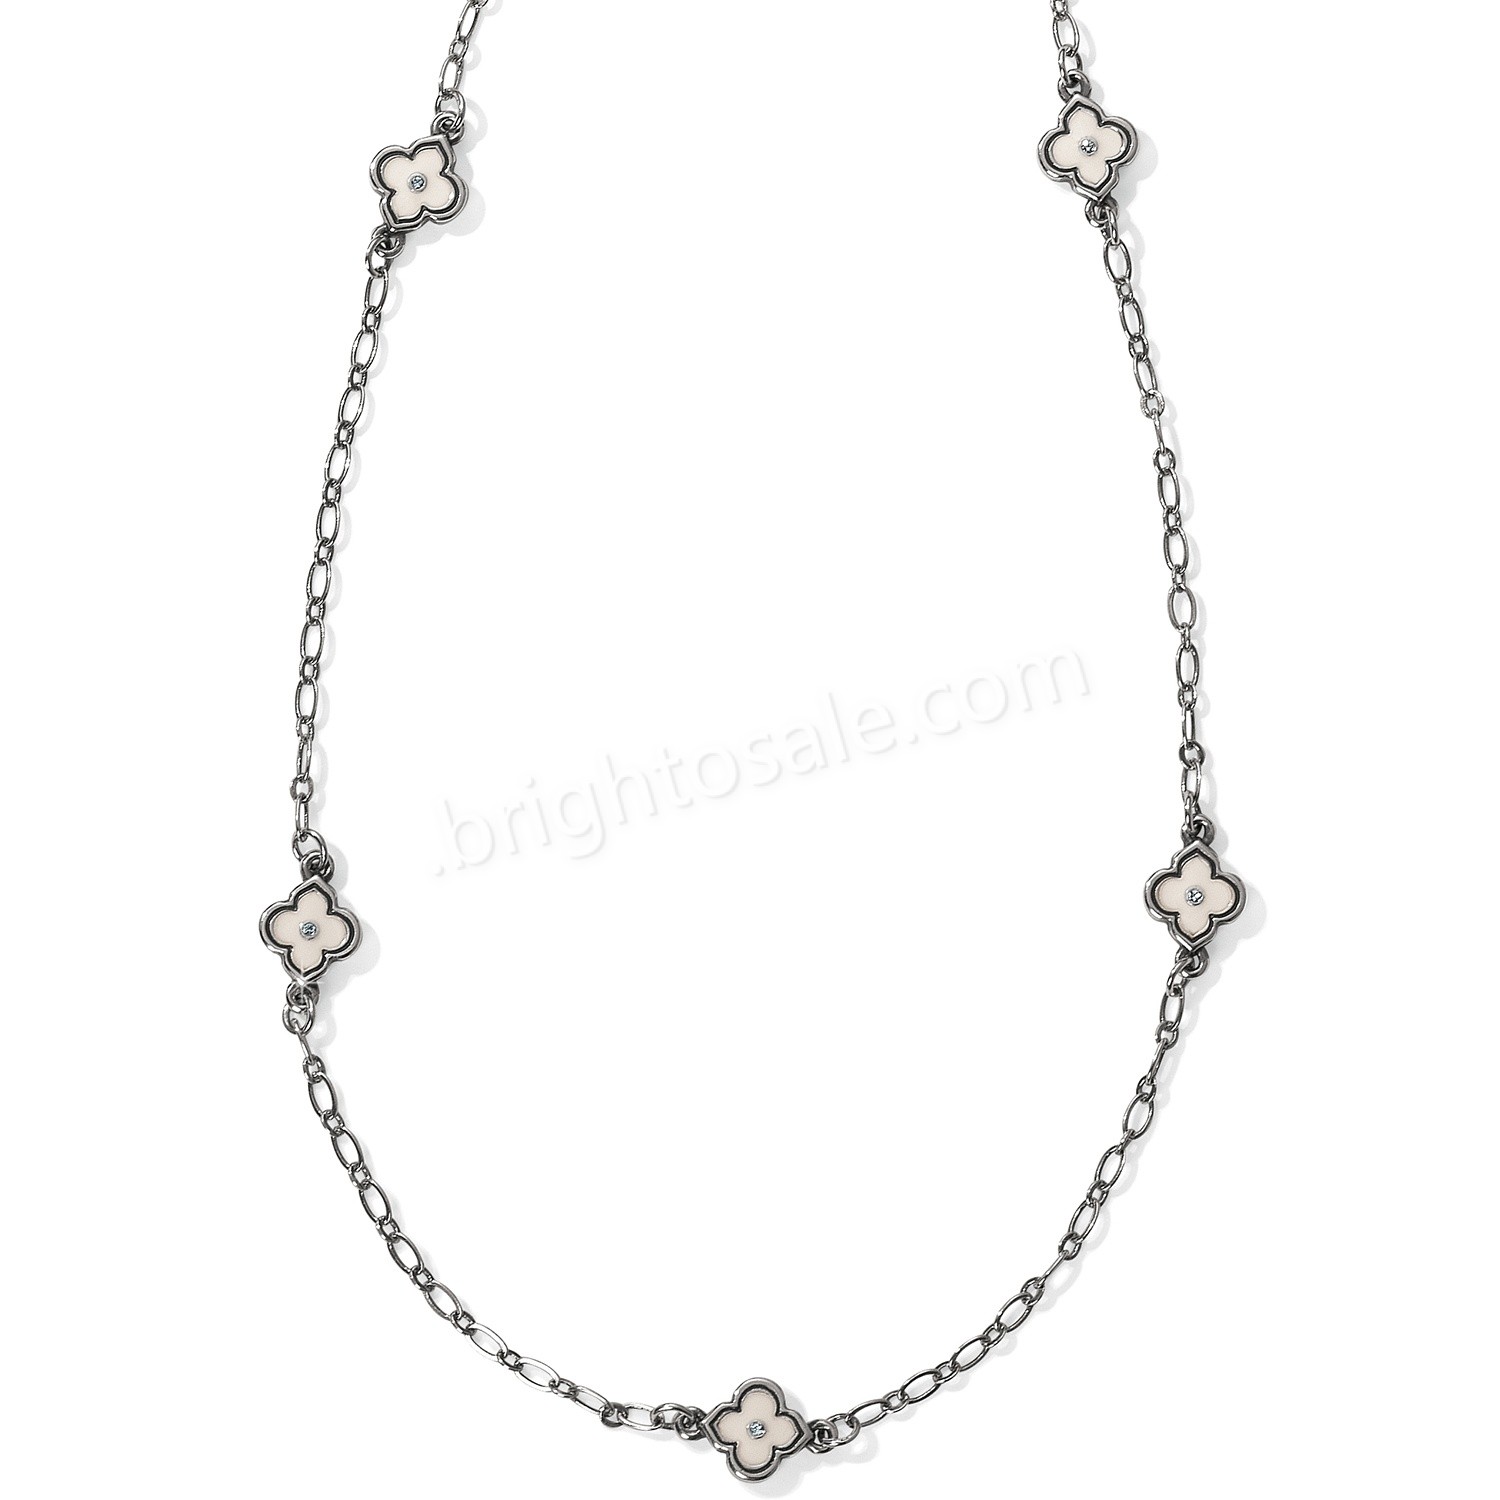 Brighton Collectibles & Online Discount Marrakesh Long Tassel Necklace - Brighton Collectibles & Online Discount Marrakesh Long Tassel Necklace